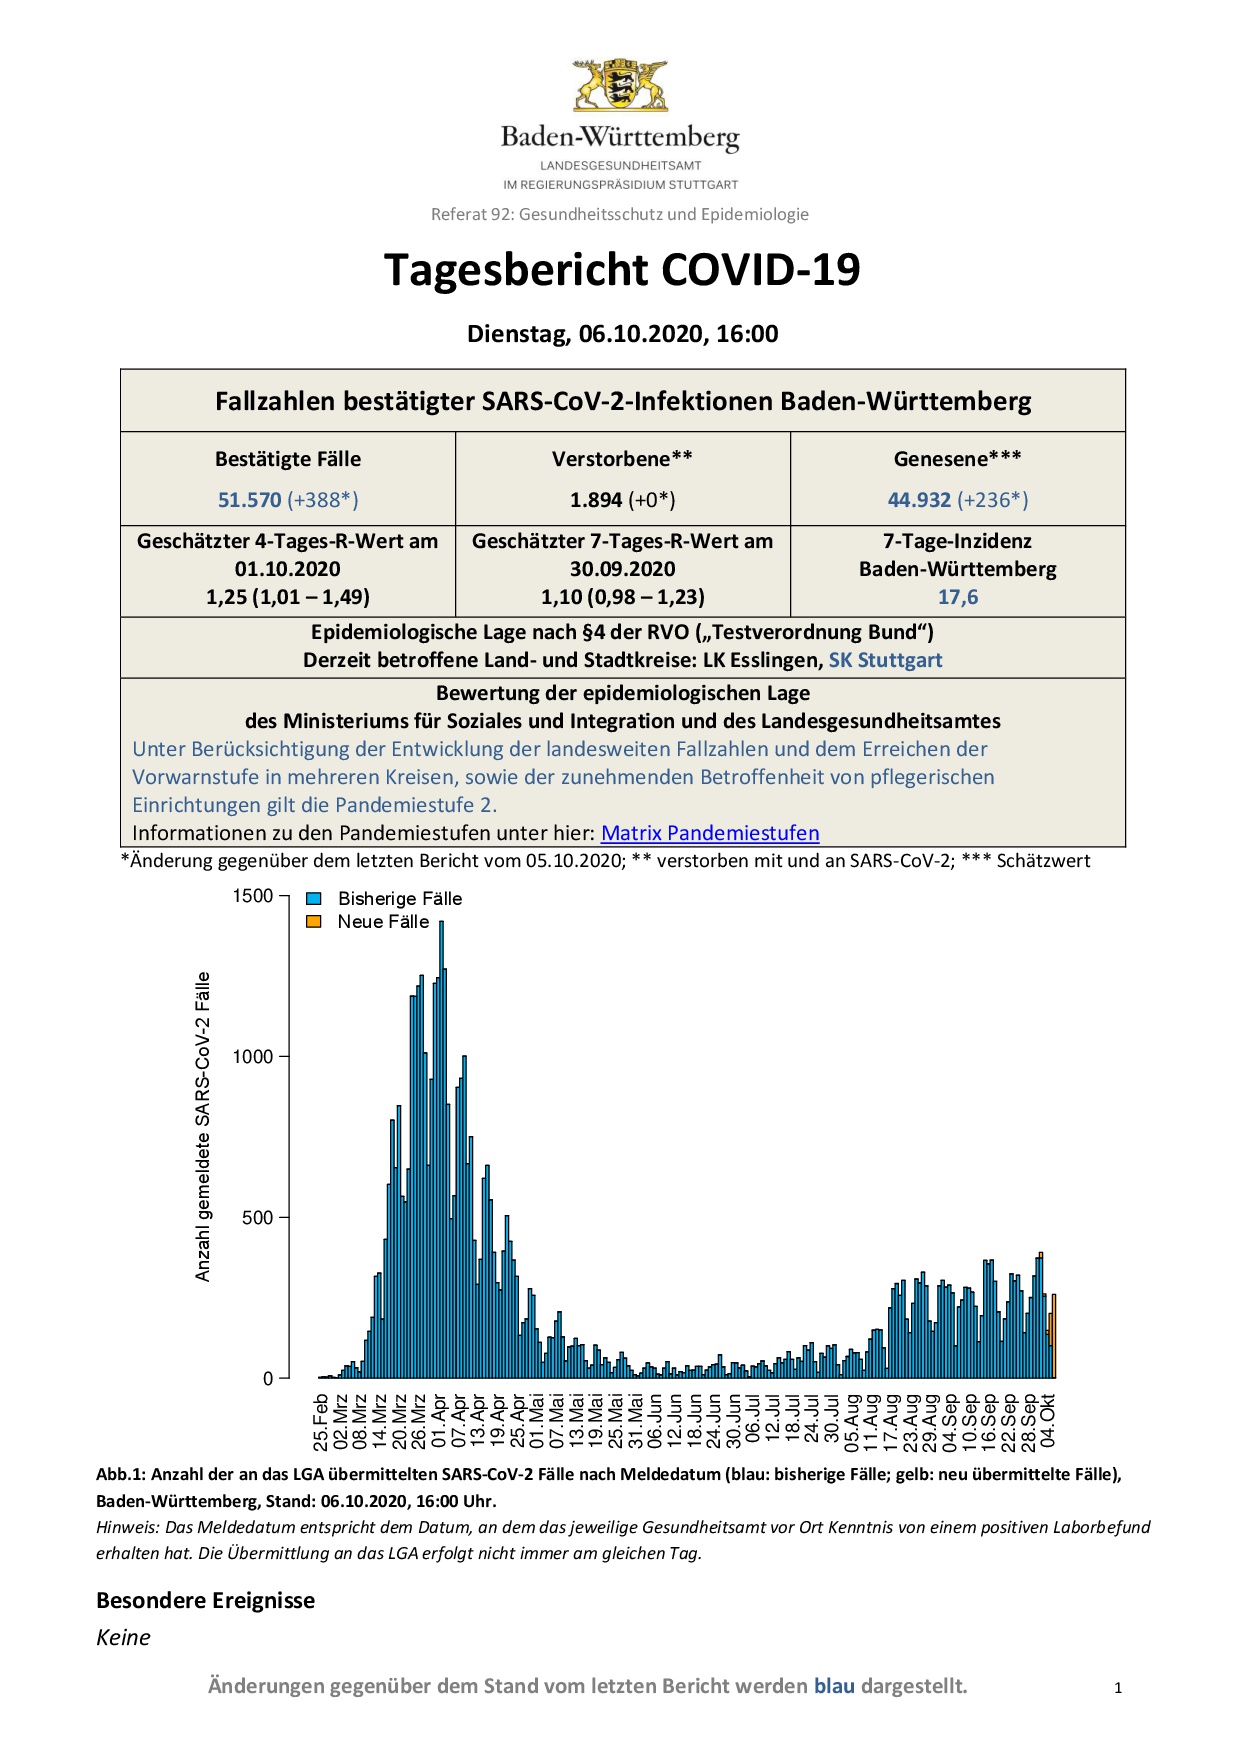 COVID-19 Tagesbericht (06.10.2020) des Landesgesundheitsamts Baden-Württemberg